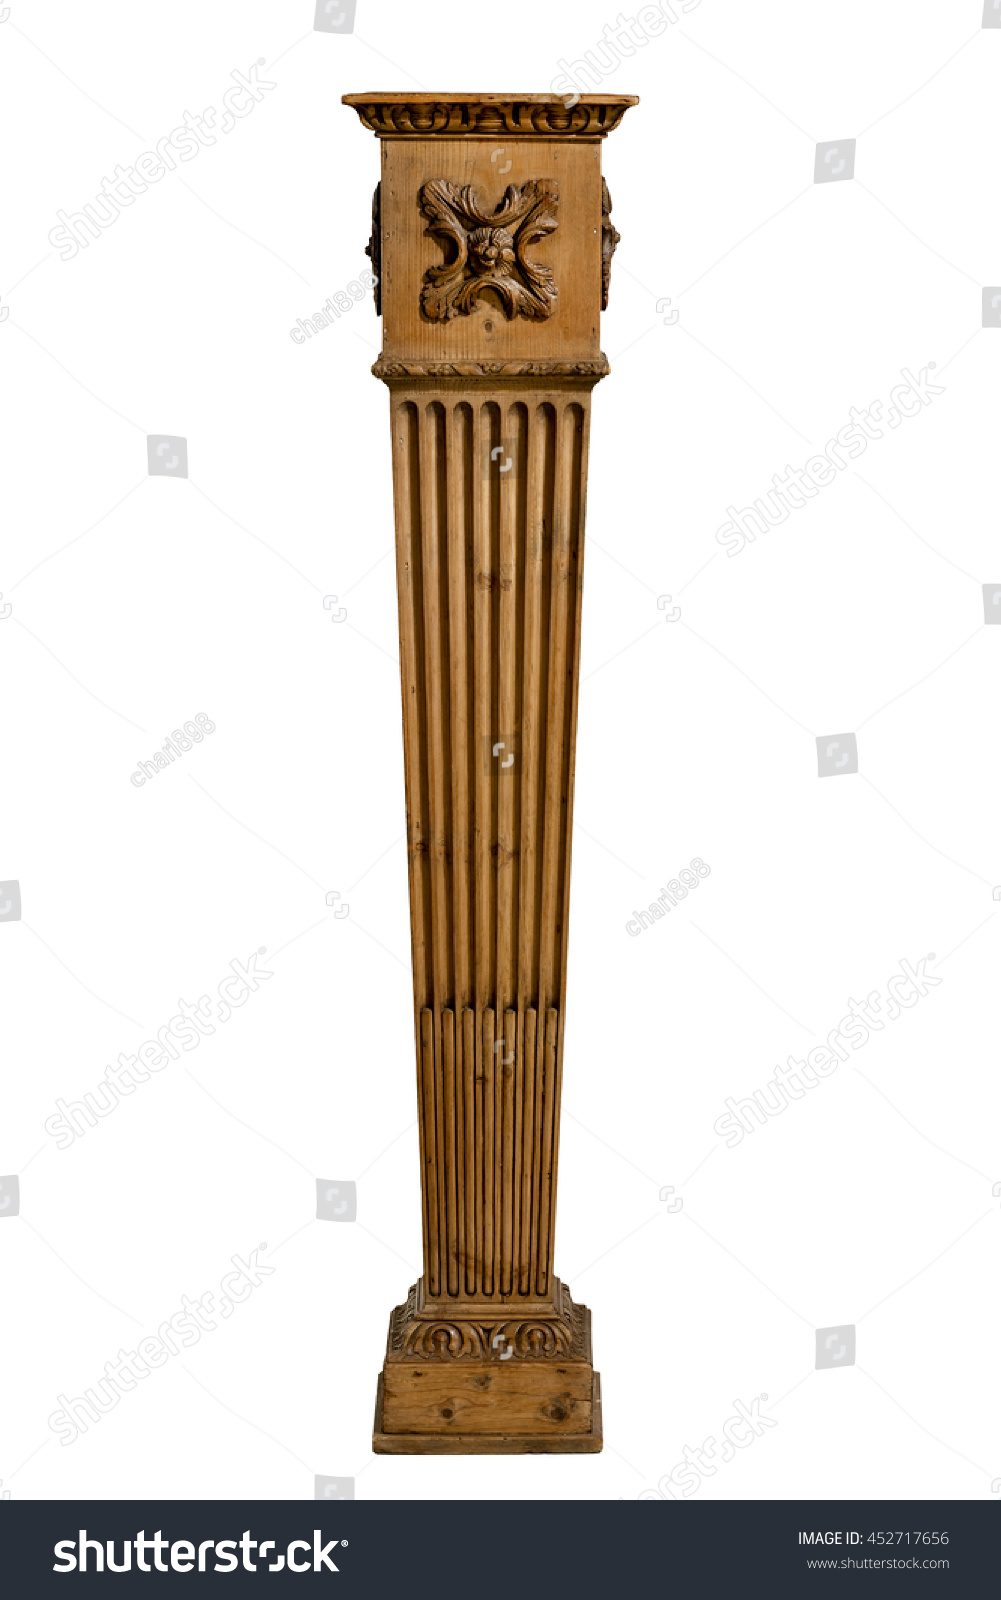 Wooden Old Antique Pedestal Column Interiors Stock Photo 452717656